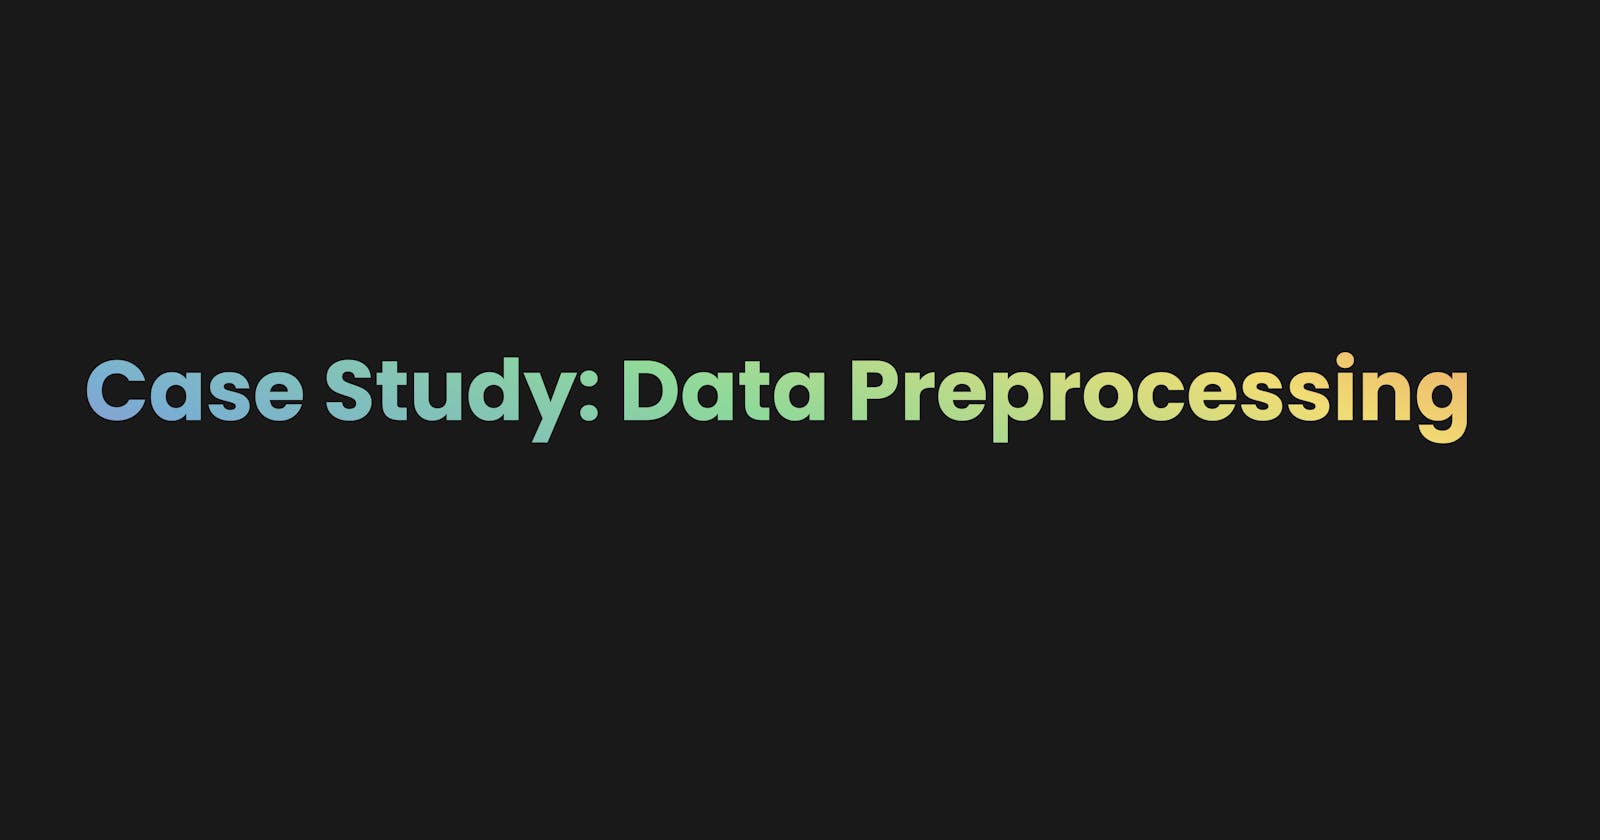 Case Study: Data Preprocessing